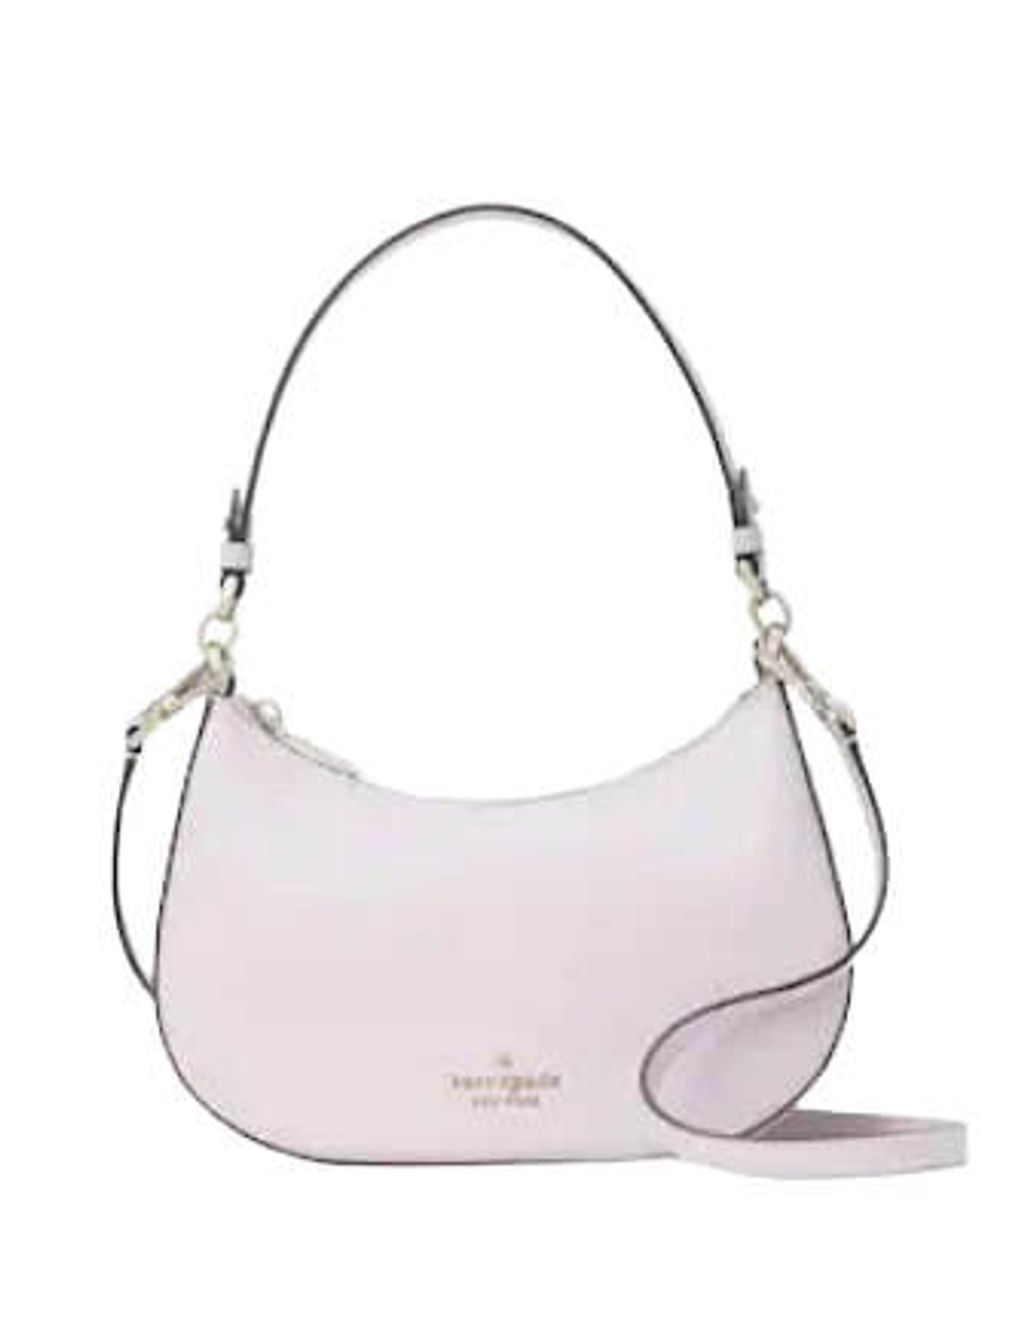 handbagbranded.com getlush outlet personalshopper usa malaysia ready stock Kate Spade Staci Crossbody in Lilac Moon